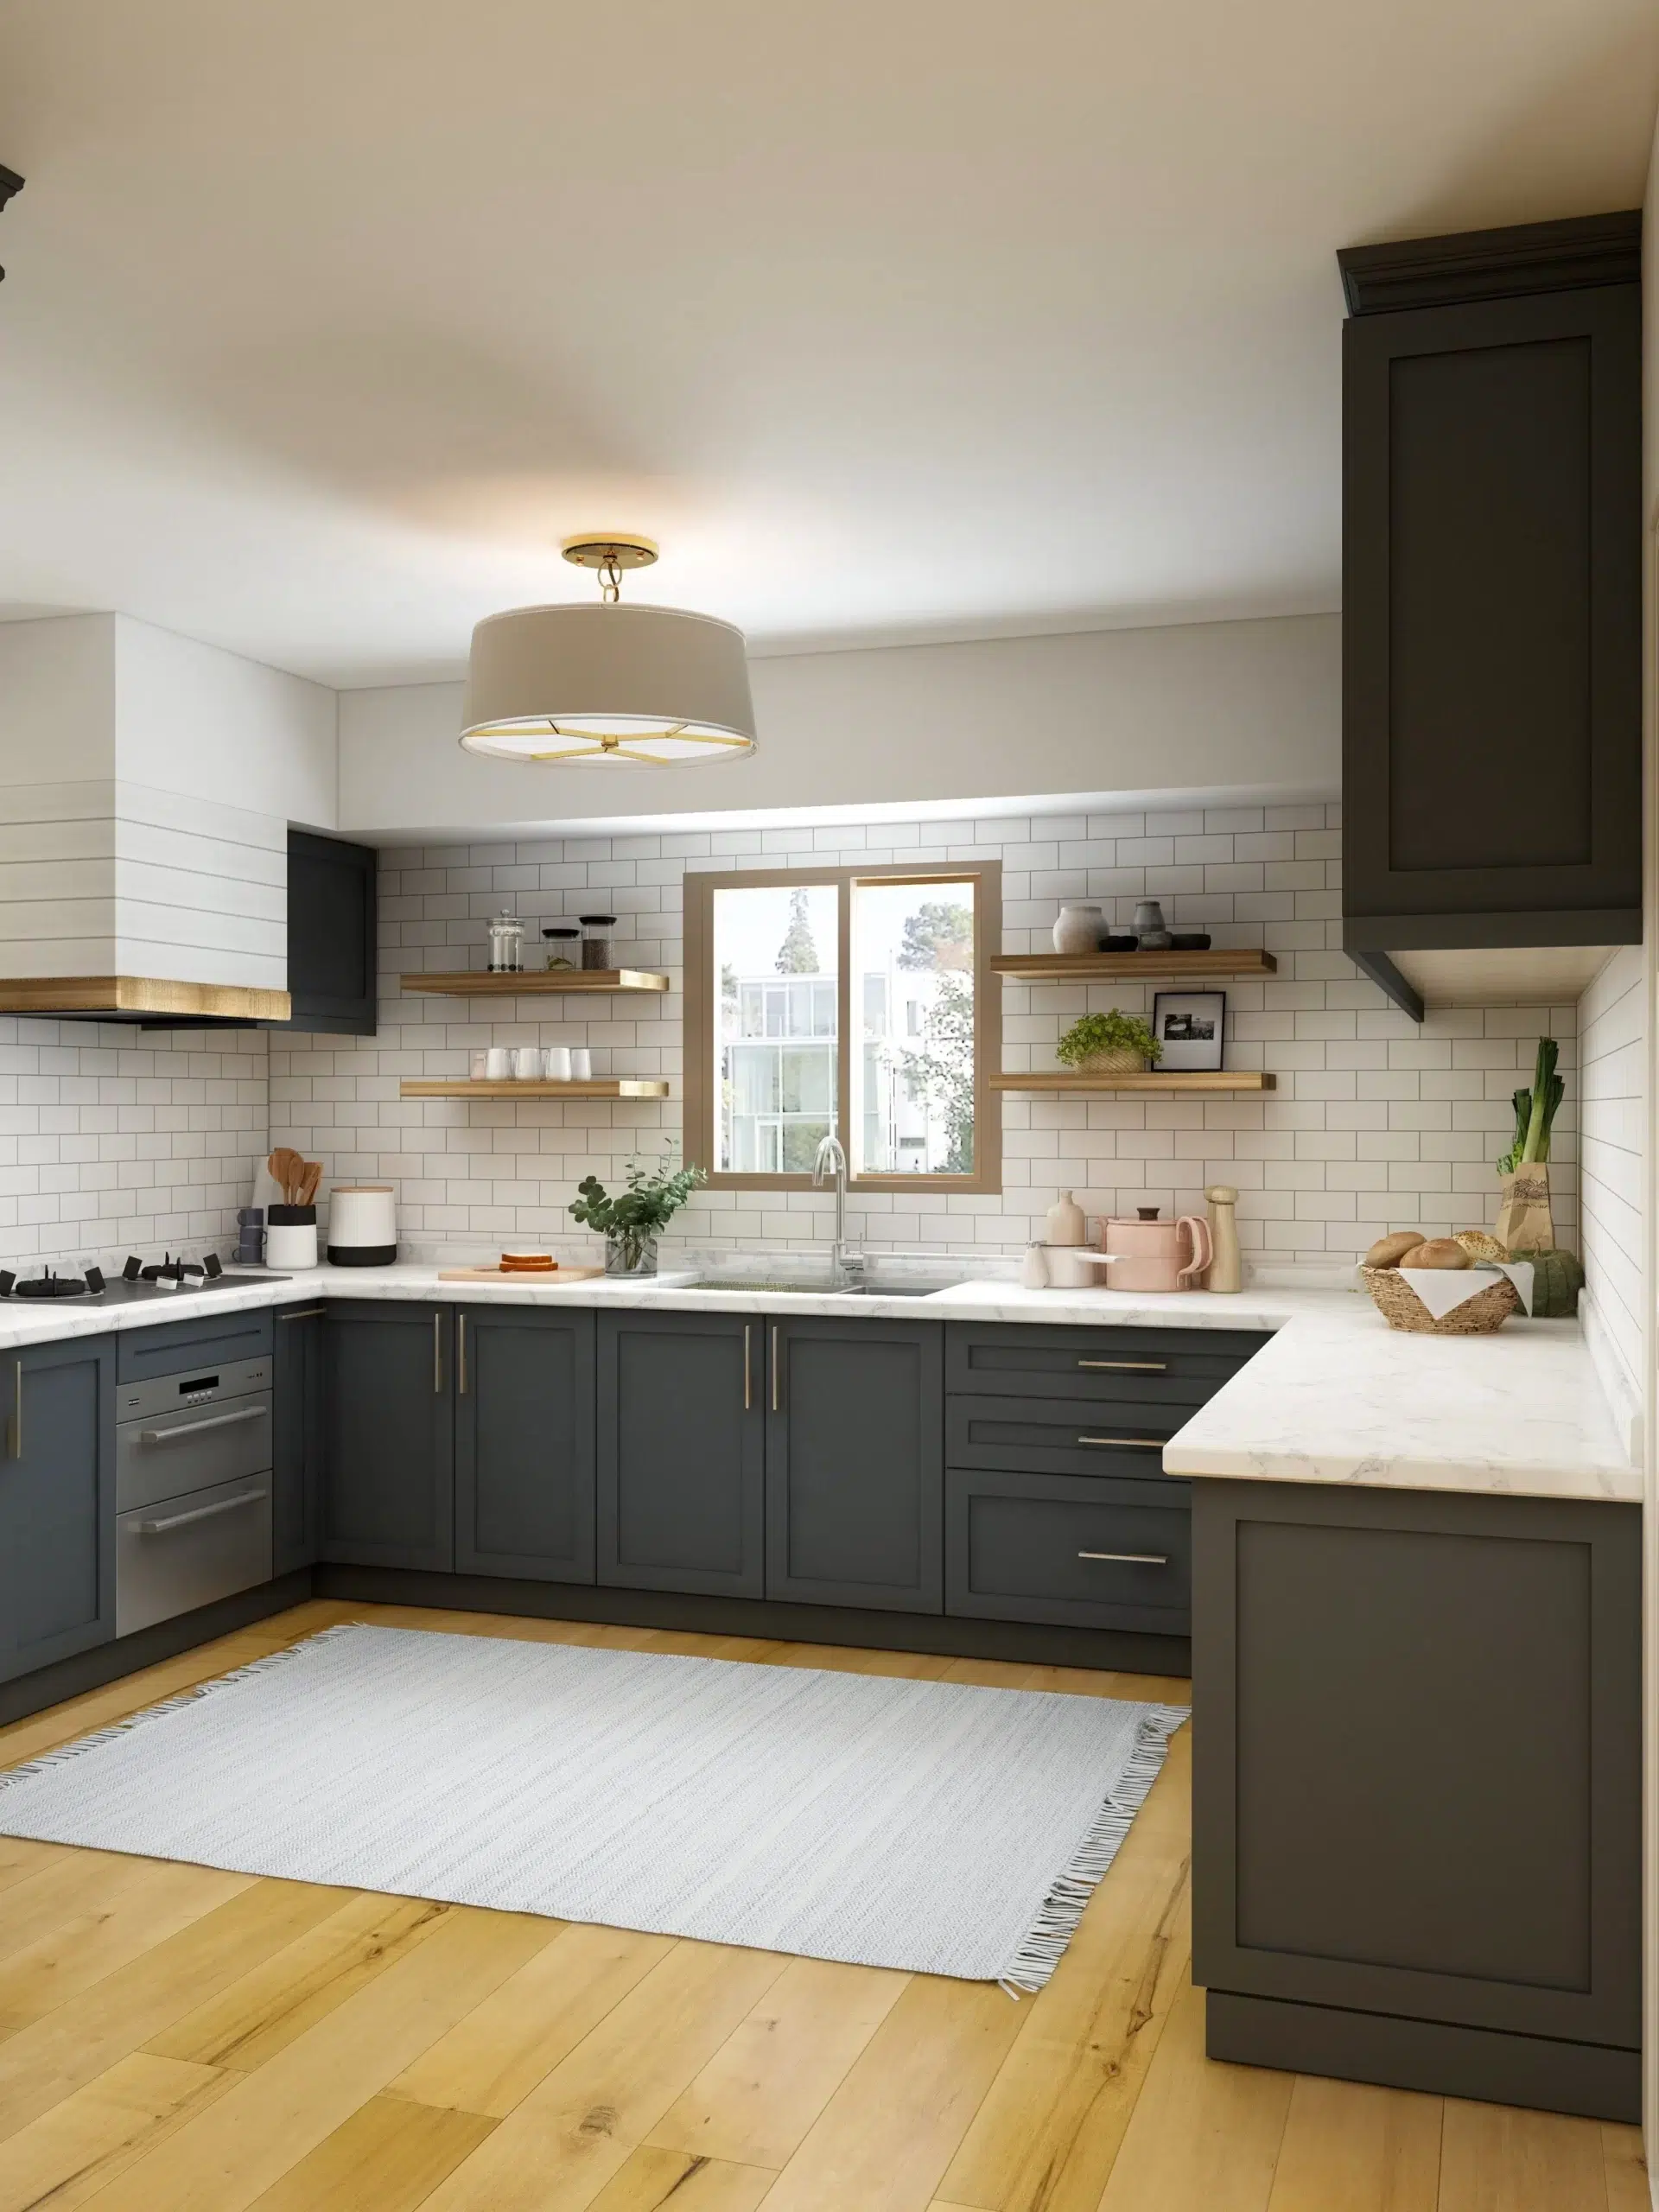 Flexible Finance Options For Kitchen Renovation